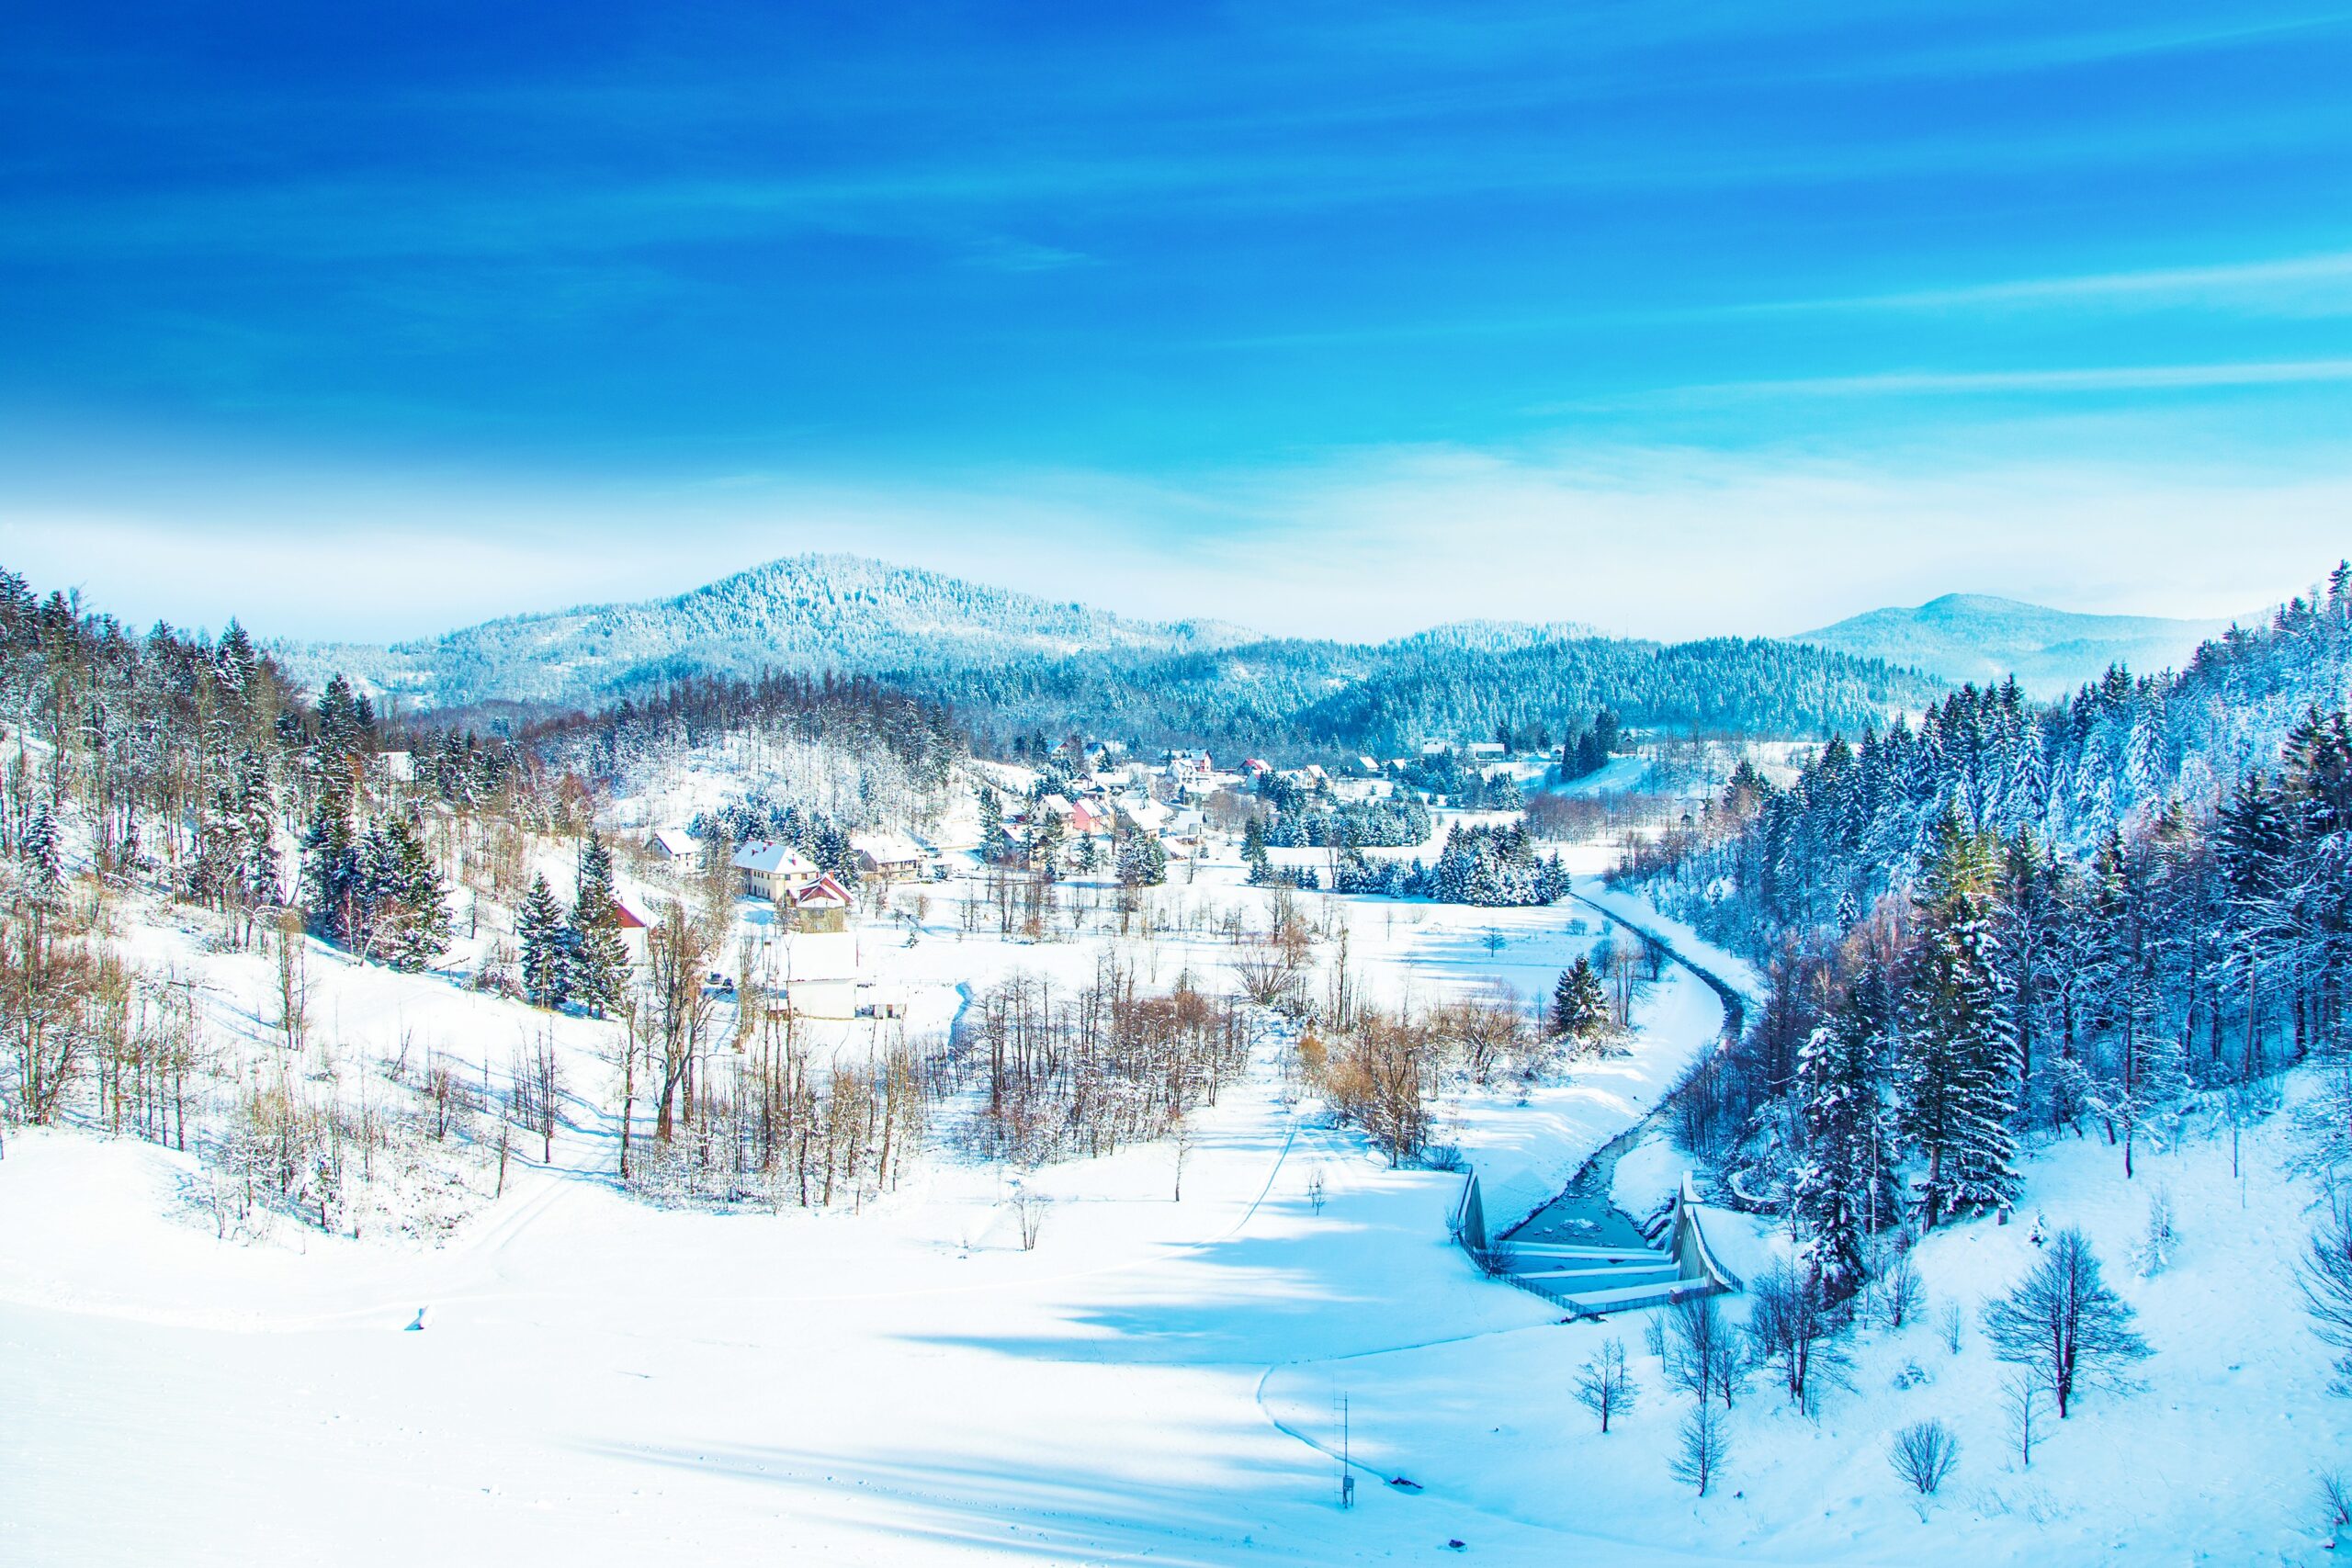 <img src="winter croatia.jpg" alt="winter in croatia countryside snow "/>